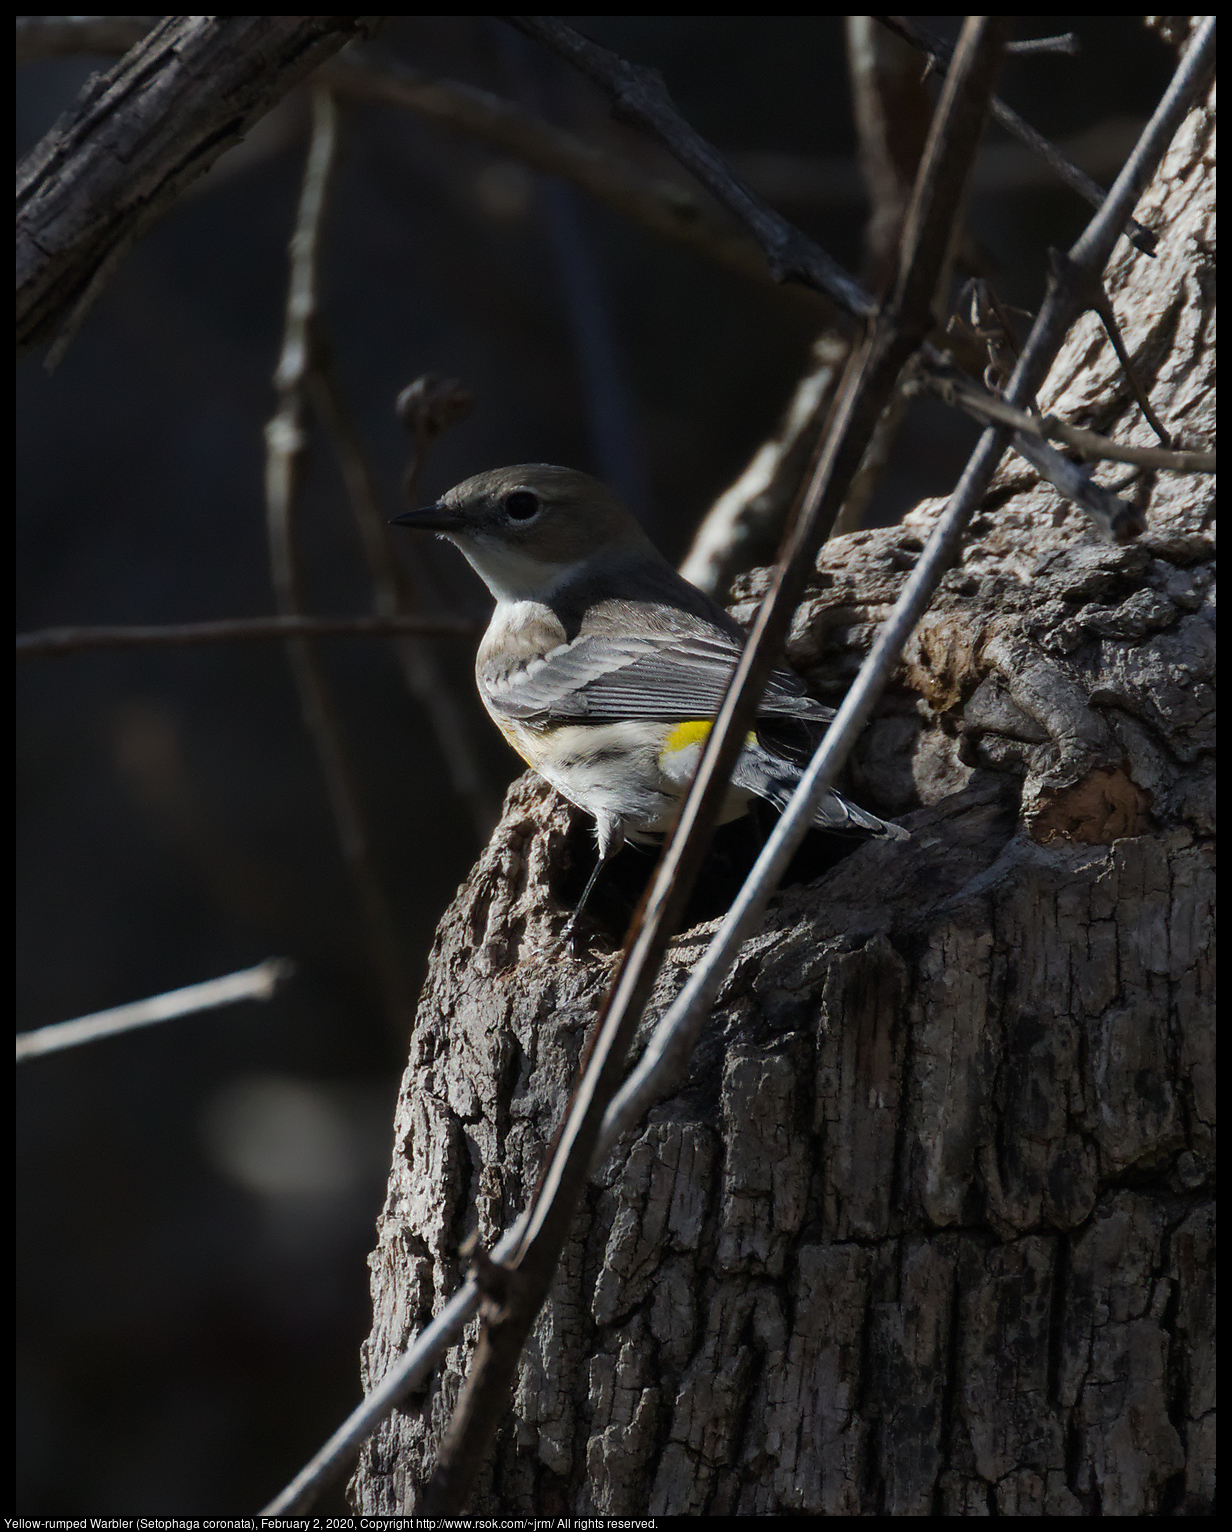 Yellow-rumped Warbler (Setophaga coronata), February 2, 2020